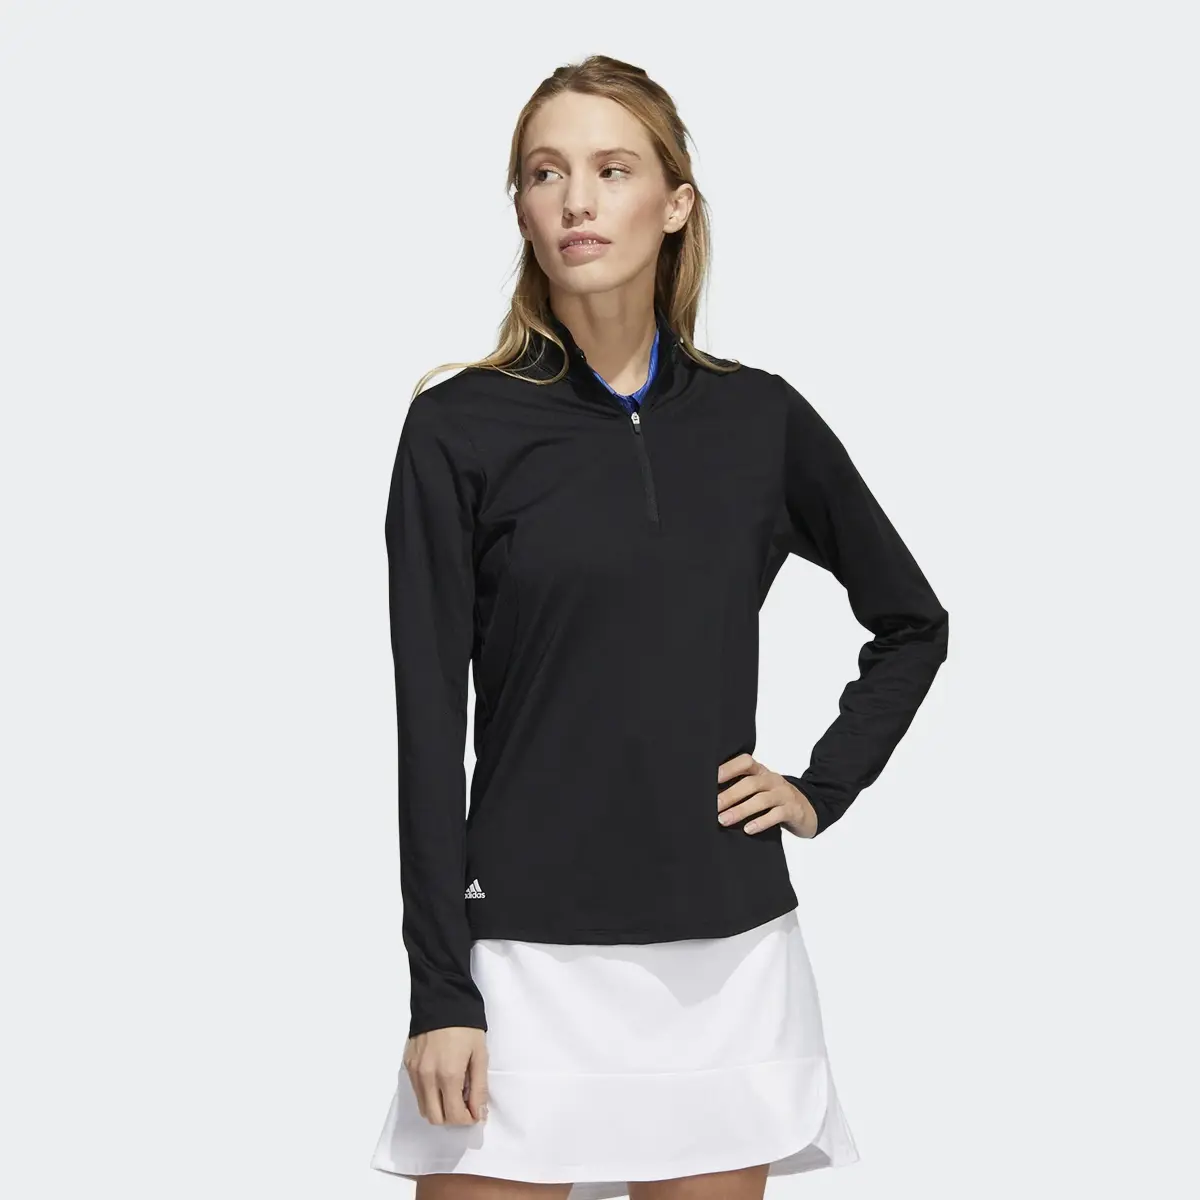 Adidas Ultimate365 Golf Shirt. 2